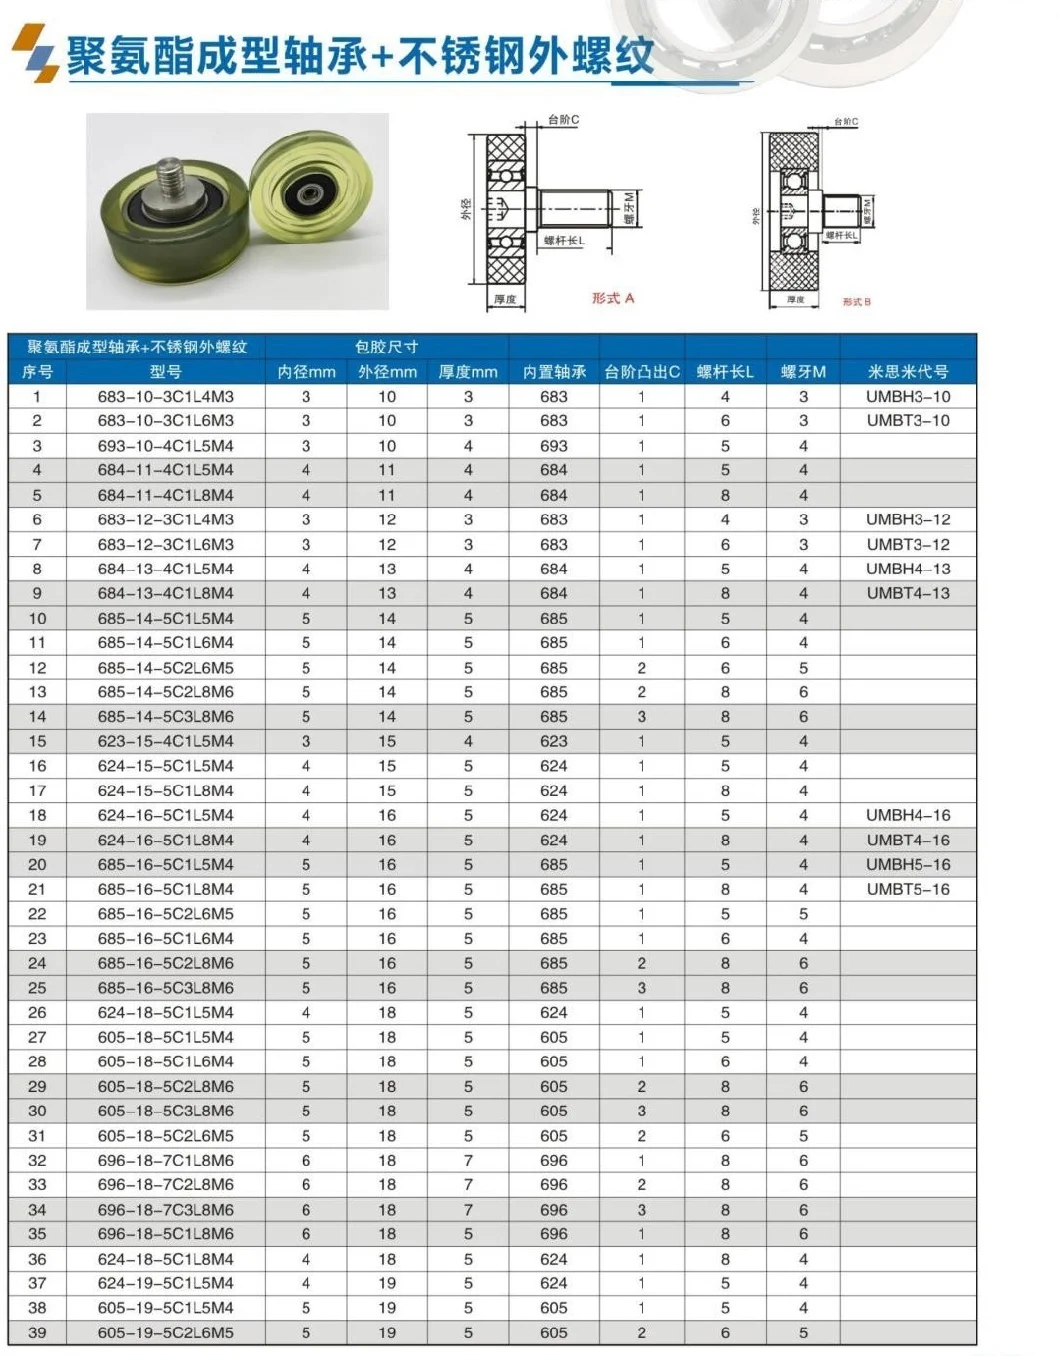 Silicon Rubber / Urethane Molded Bearings - Flat, with Threaded Shaft(UMBH20-55A UMBT20-55A UMBH20-55 UMBT20-55 UMBH25-65A UMBT25-65A UMBH25-65 UMBT25-65)